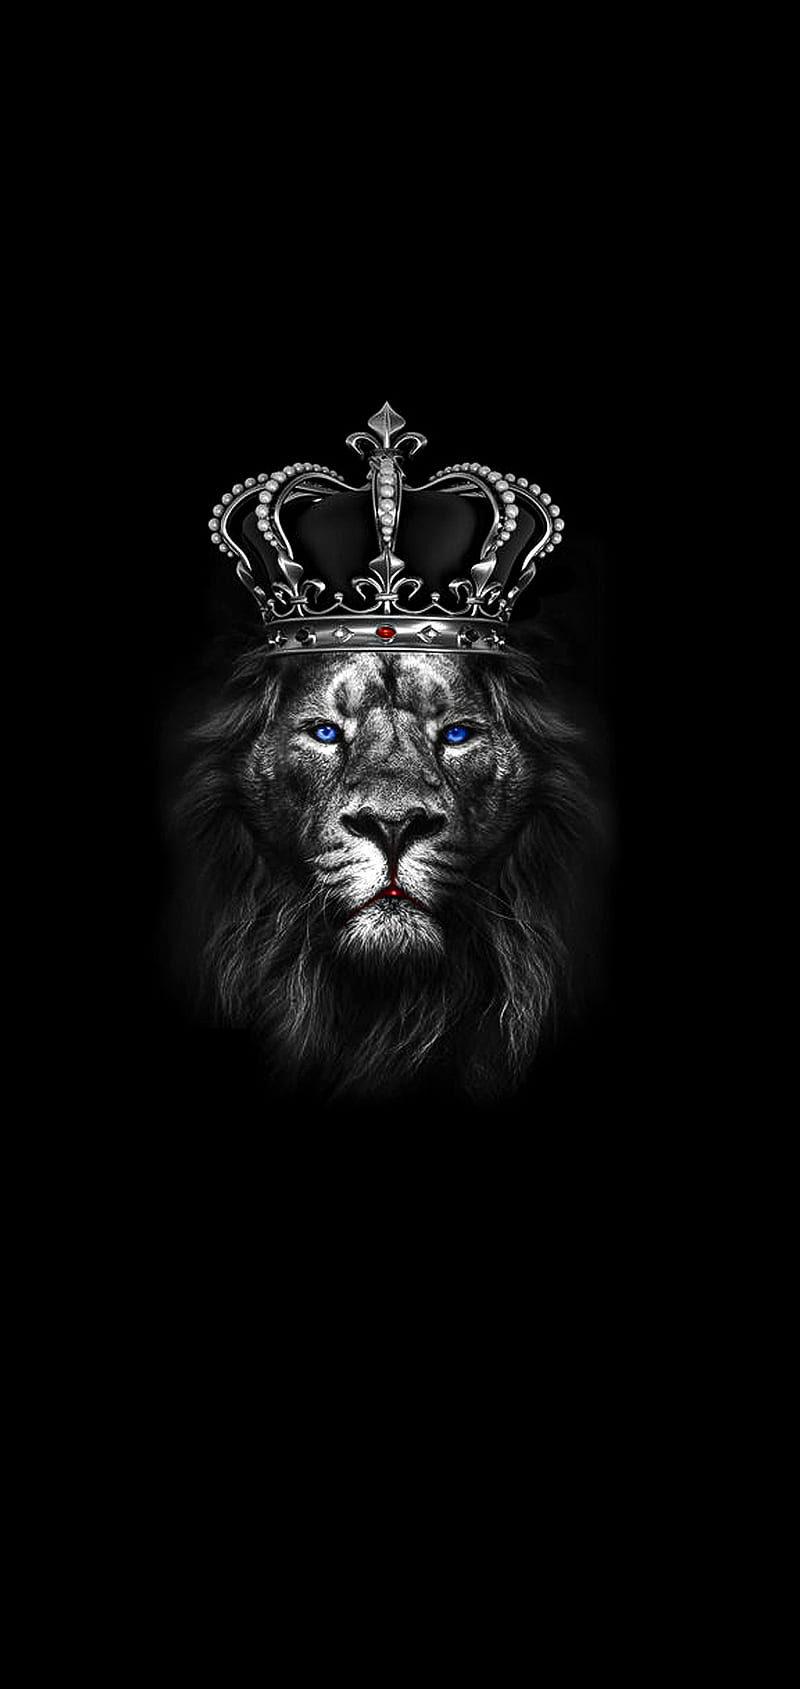 HD wallpaper lion with crown sketch fantasy art king animal  illustration  Wallpaper Flare